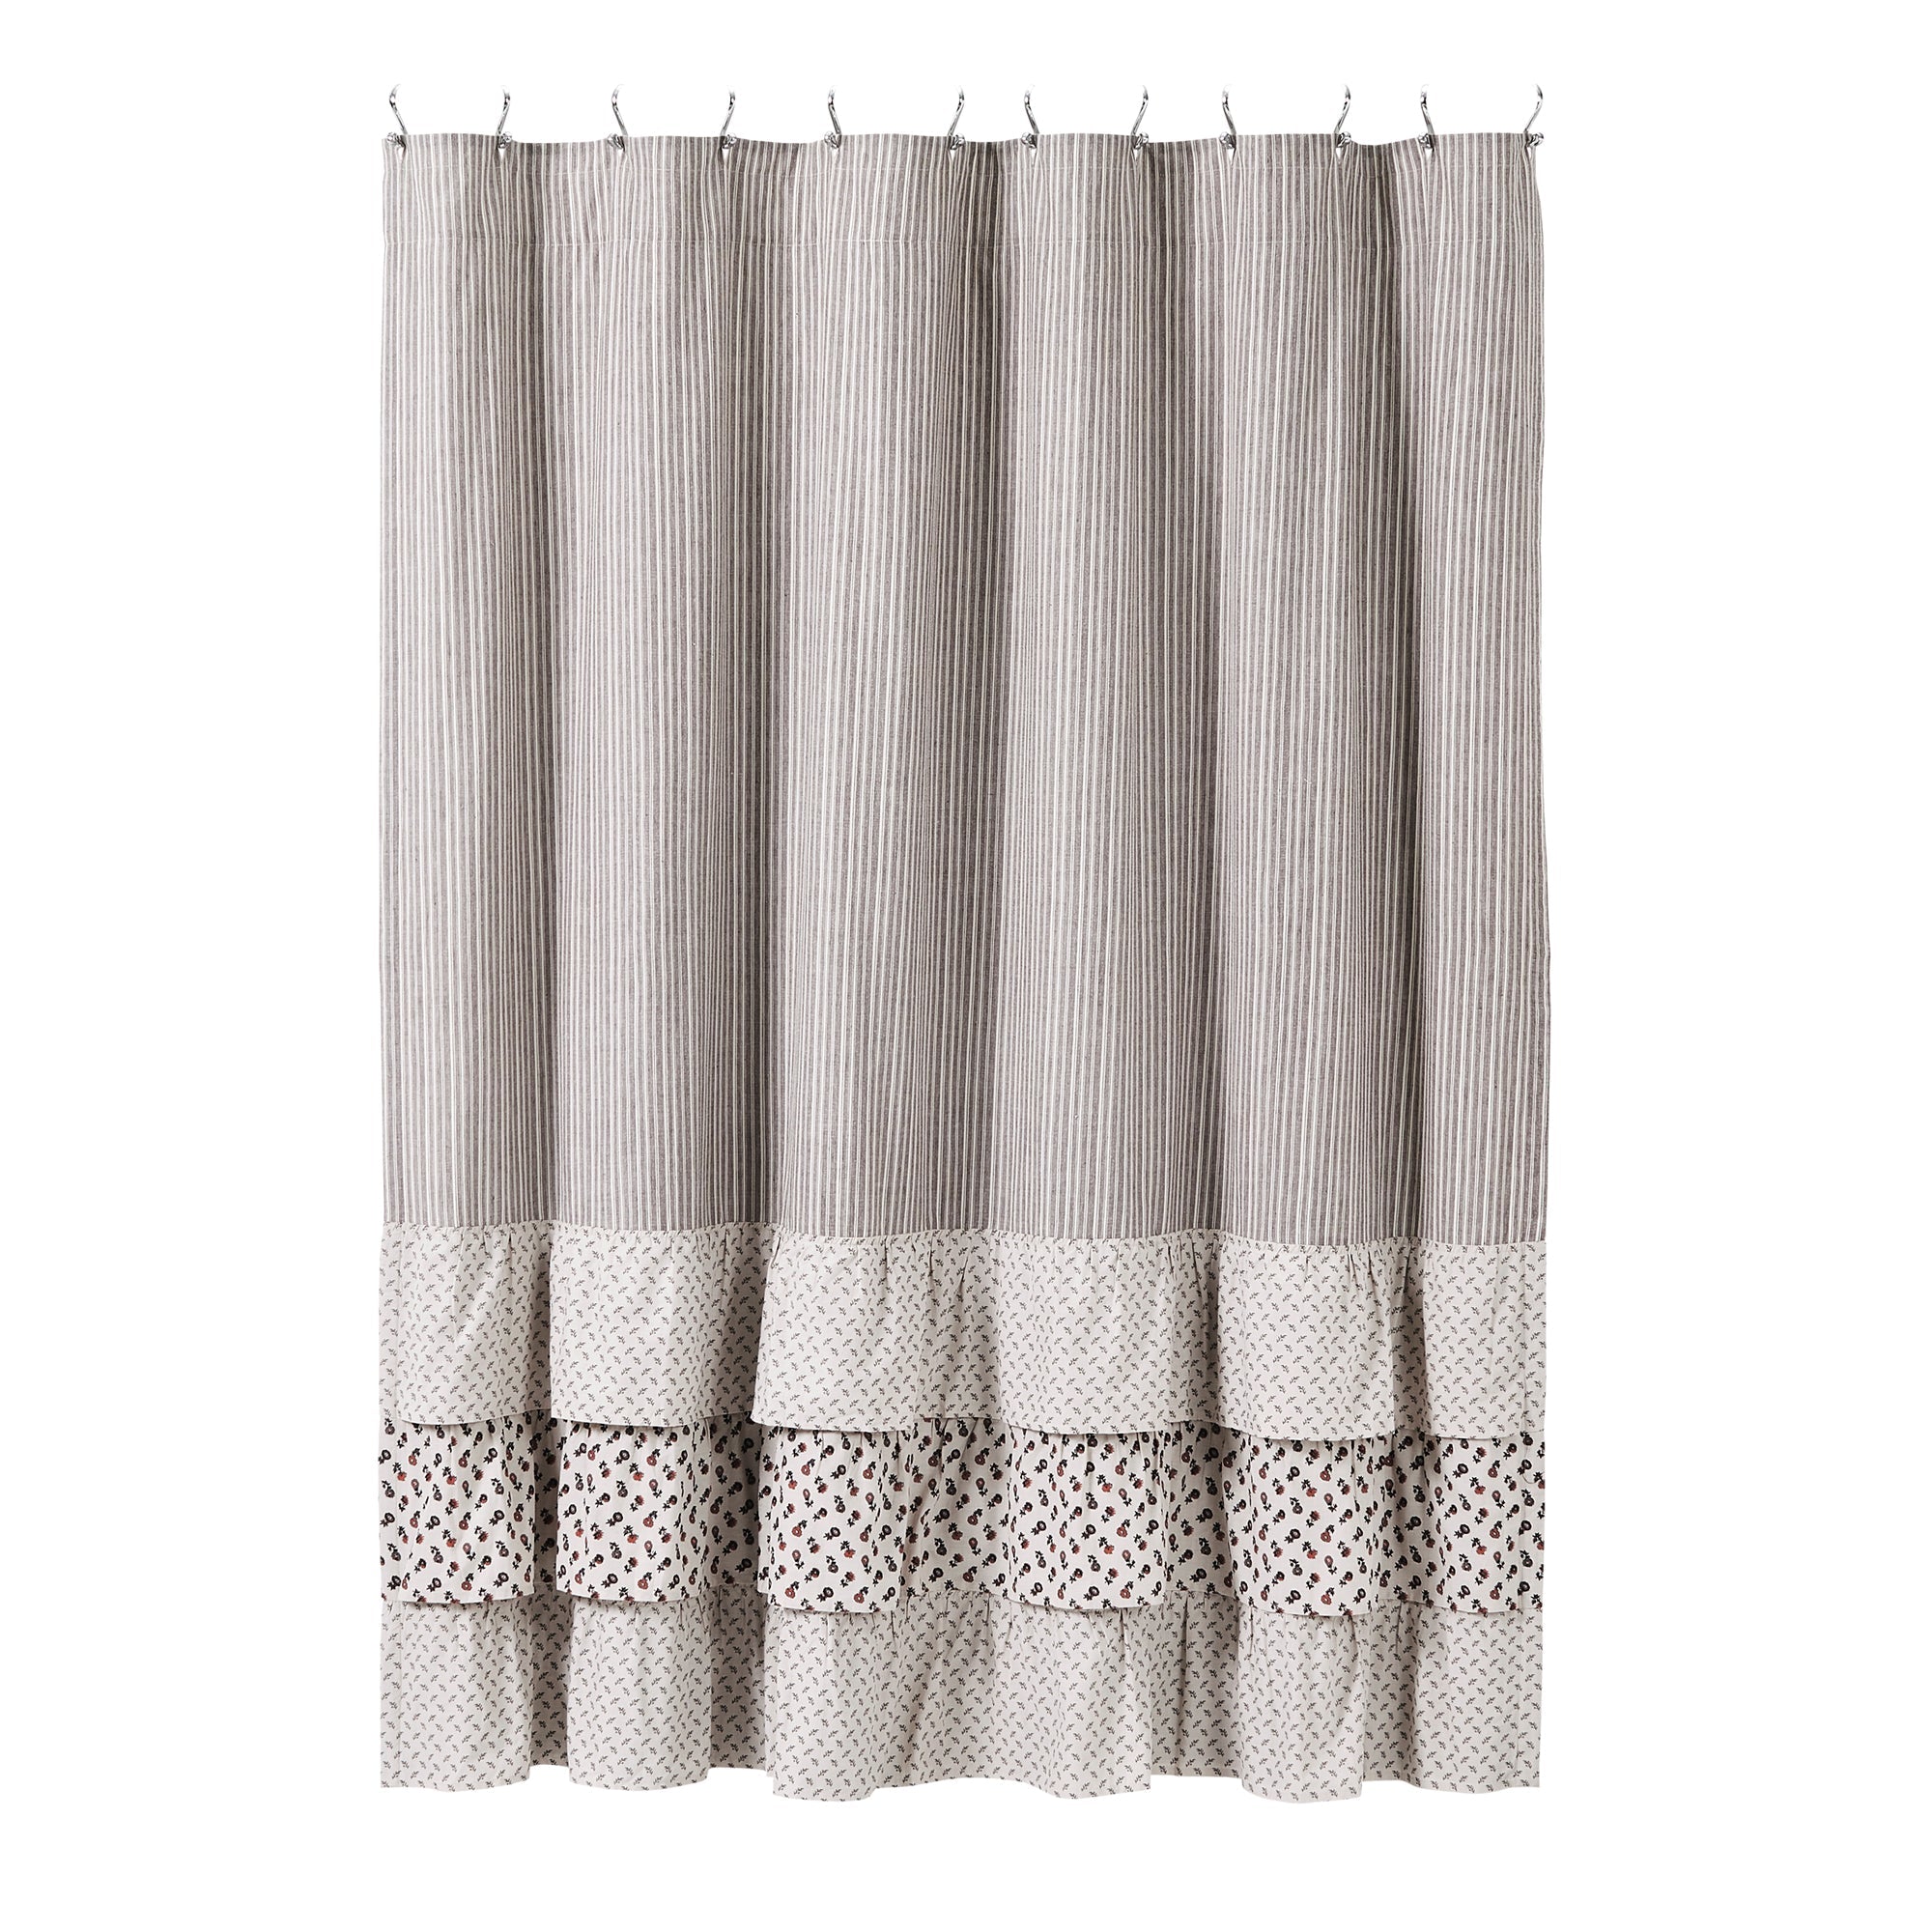 Florette Ruffled Shower Curtain 72x72 VHC Brands